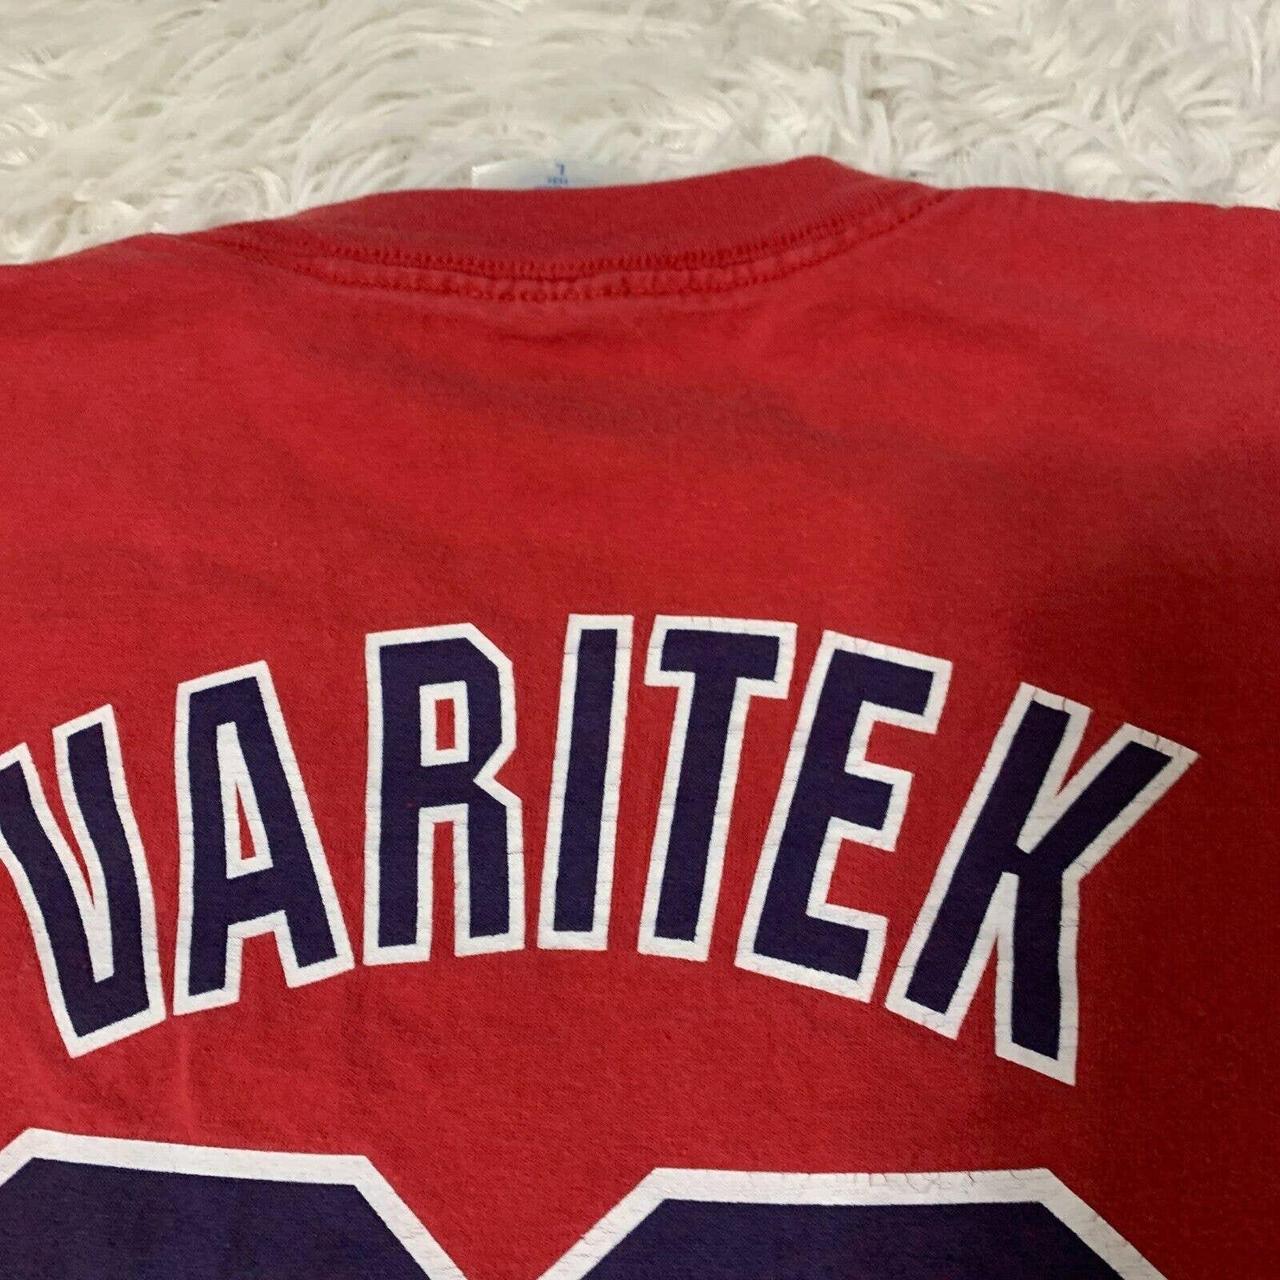 Number 33 Jason Varitek Red Sox Jersey. Perfect - Depop